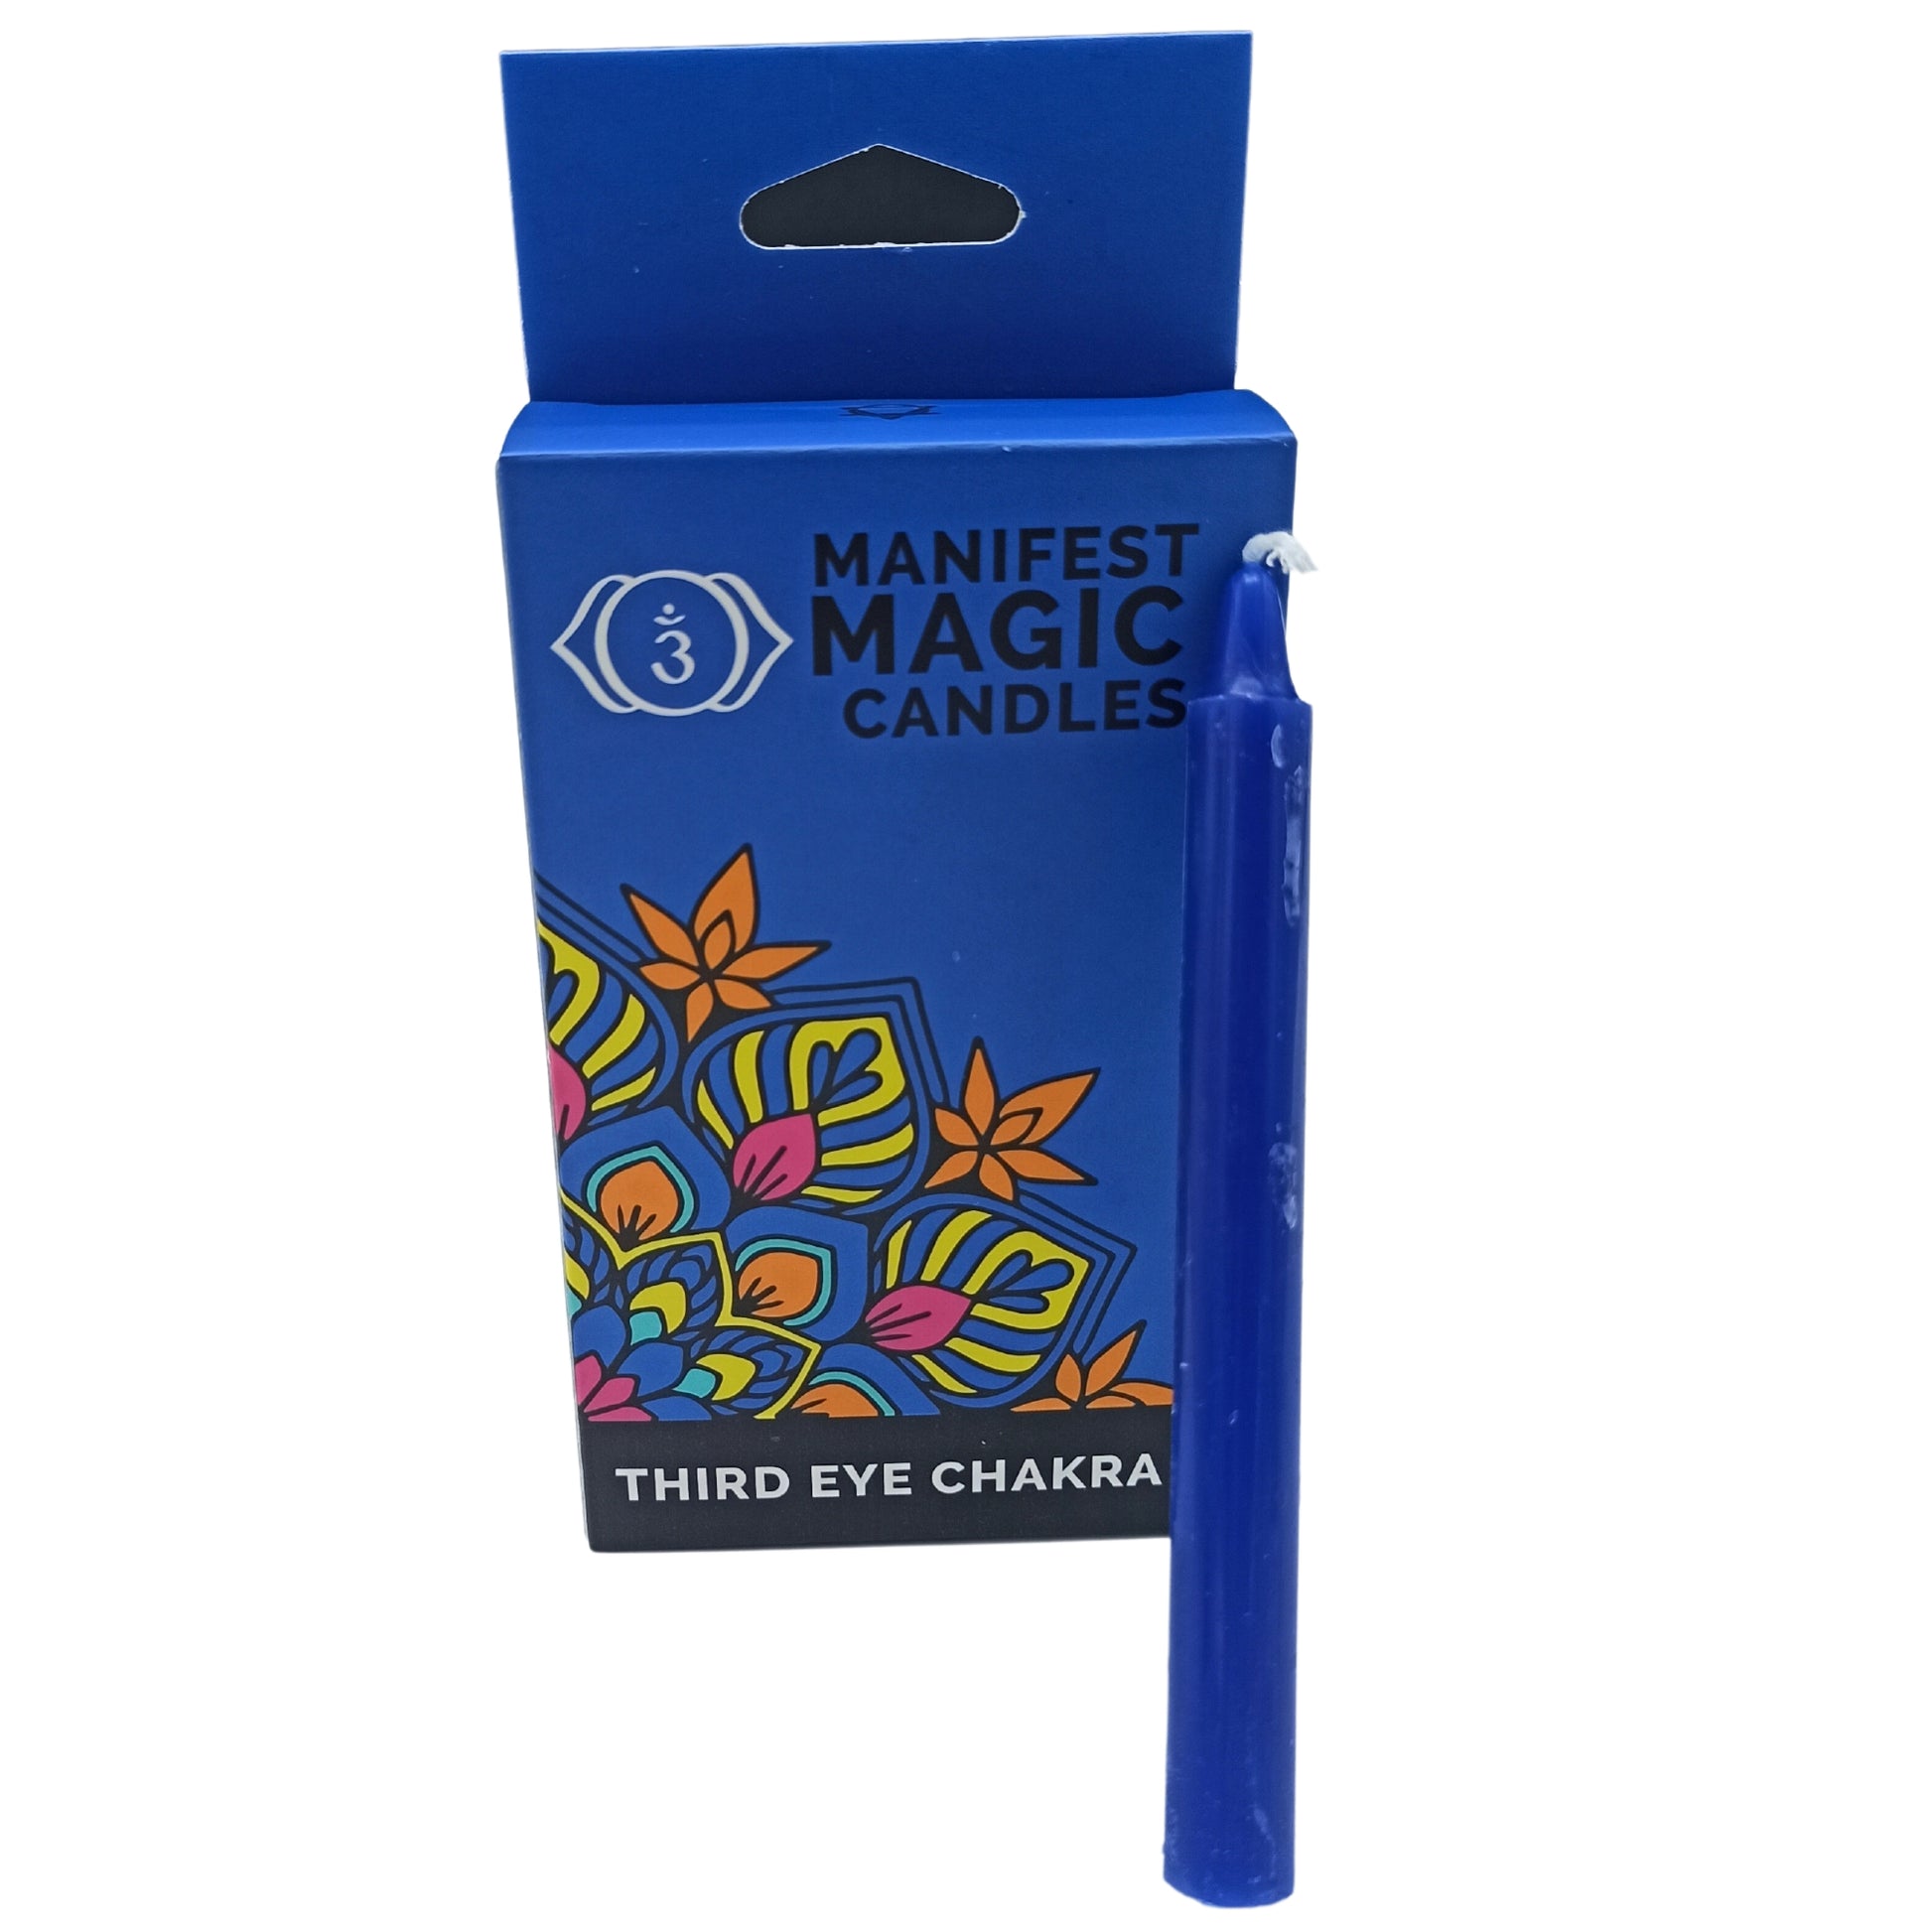 Manifest Magic Candles (pack of 12) - Indigo - Third Eye Chakra - Kaftans direct